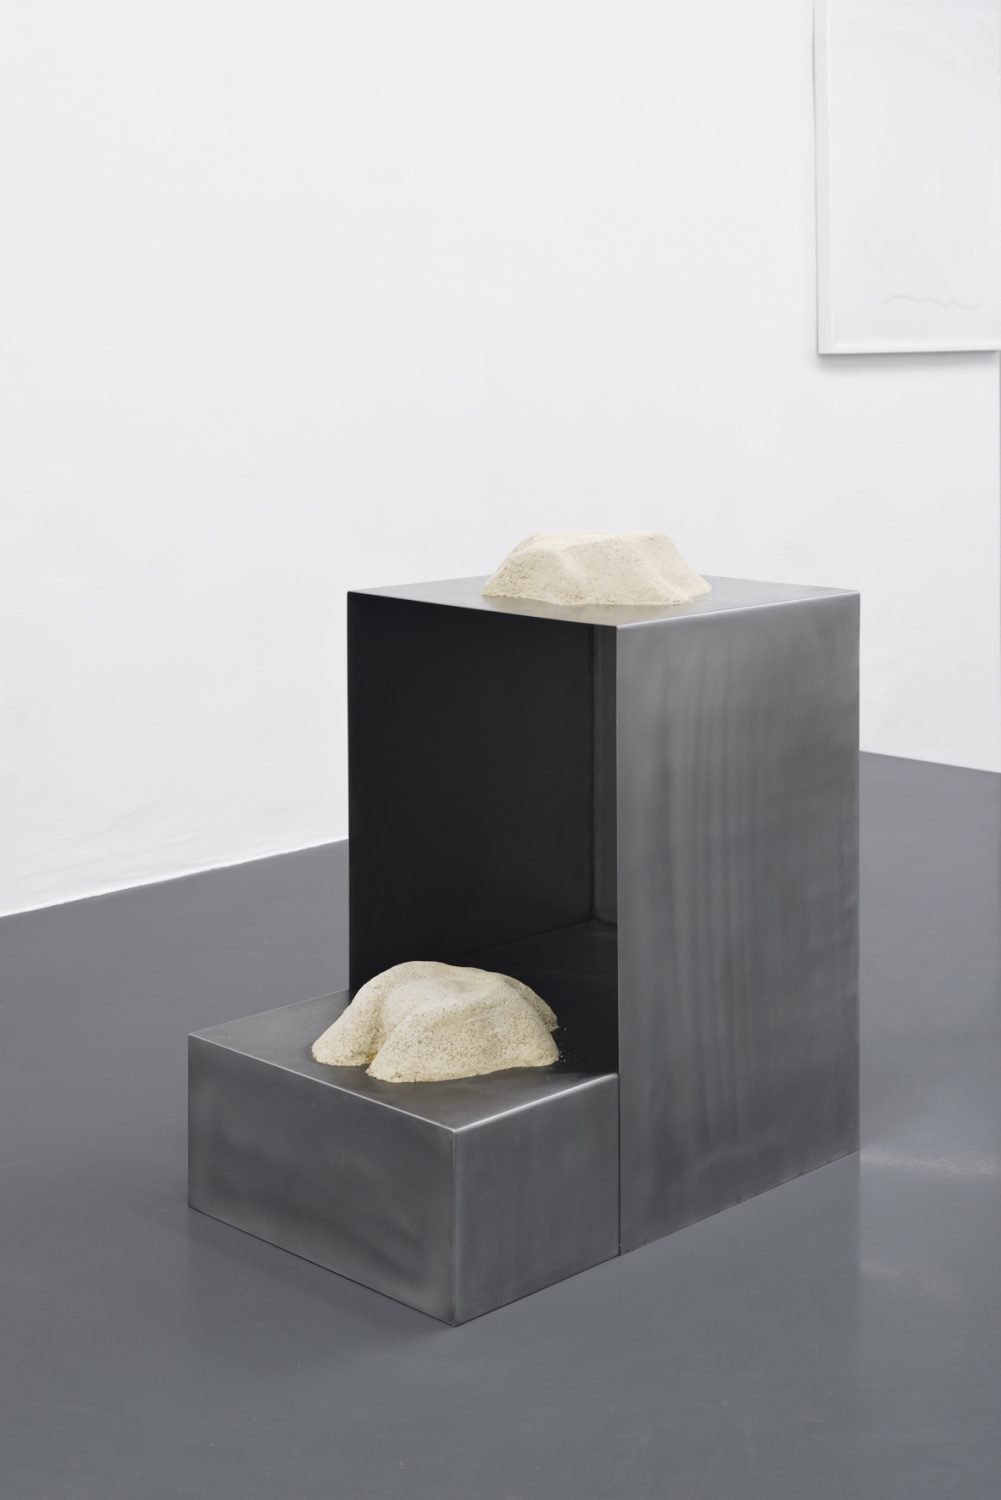 Lena HenkeEure Frankfurter Küche, 2016Metal, sand, silicone, fibreglass, epoxy resin, rubber70 x 70 x 45 cm